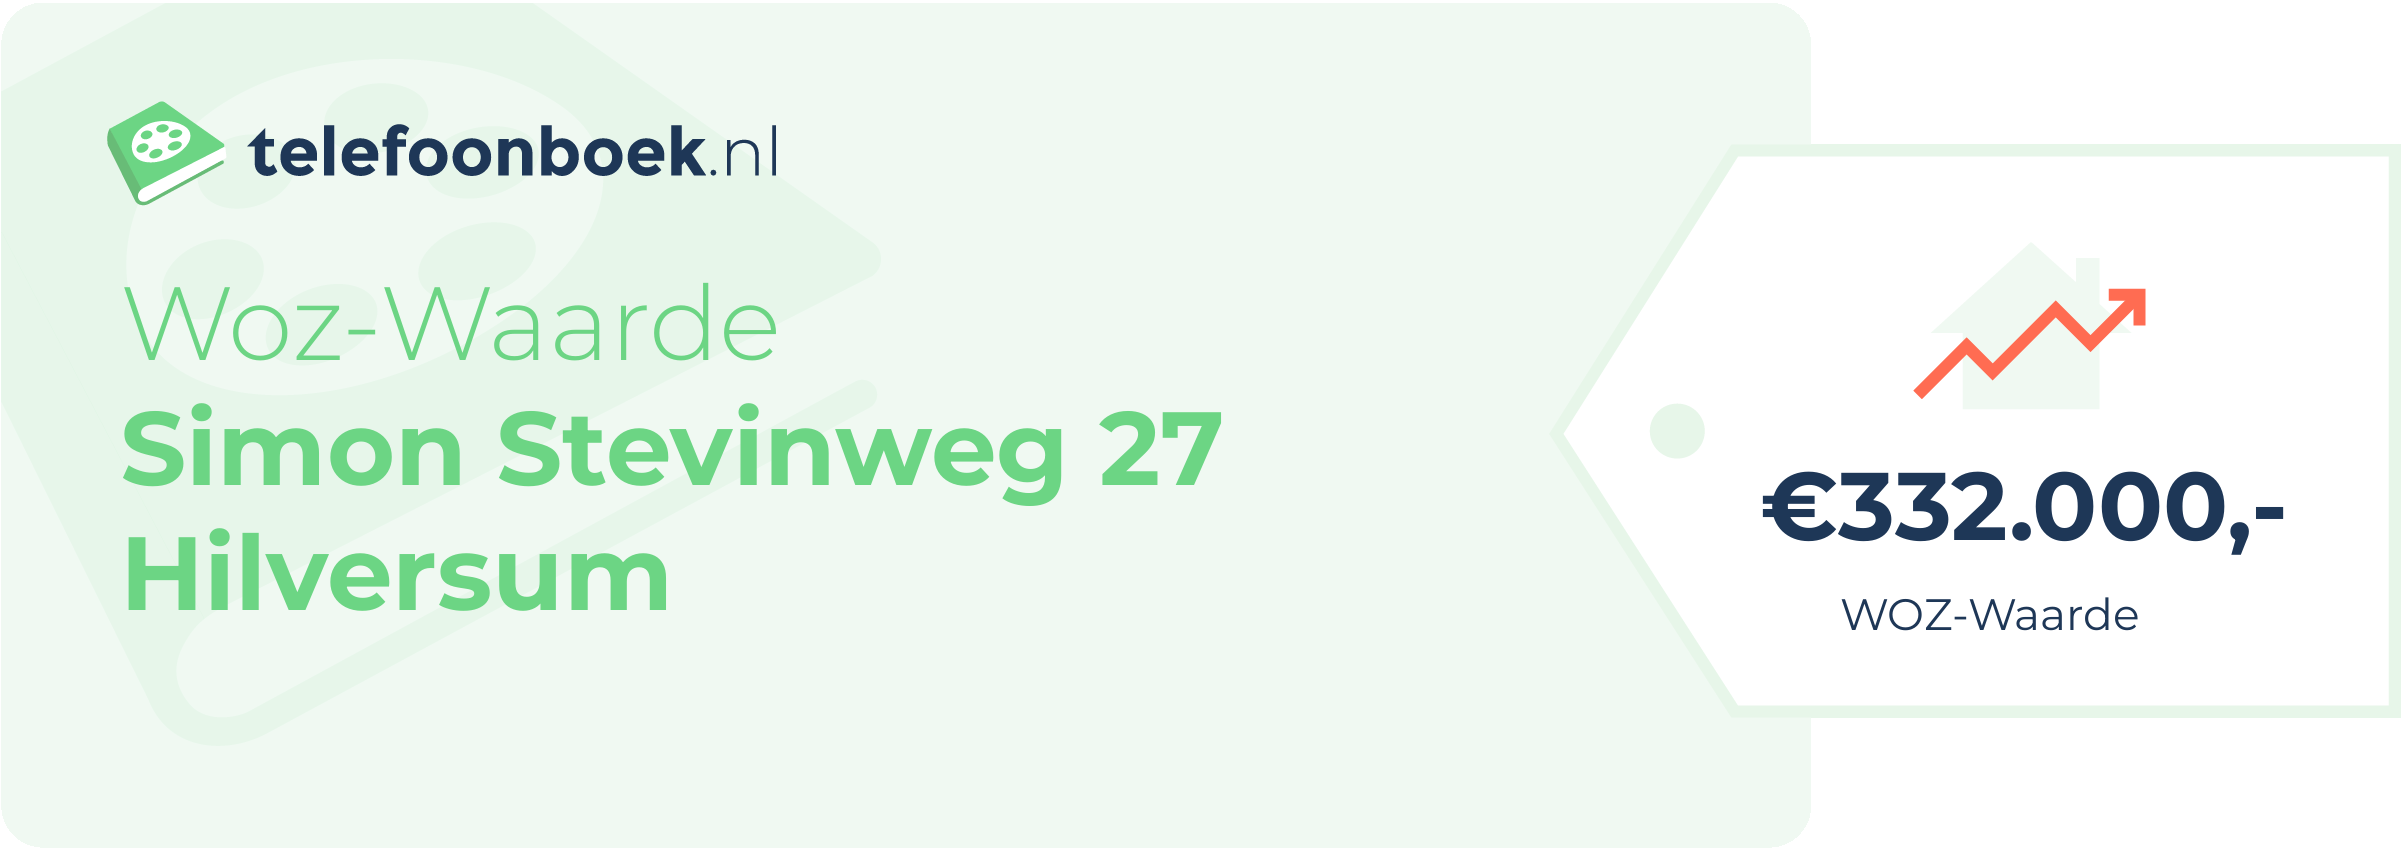 WOZ-waarde Simon Stevinweg 27 Hilversum